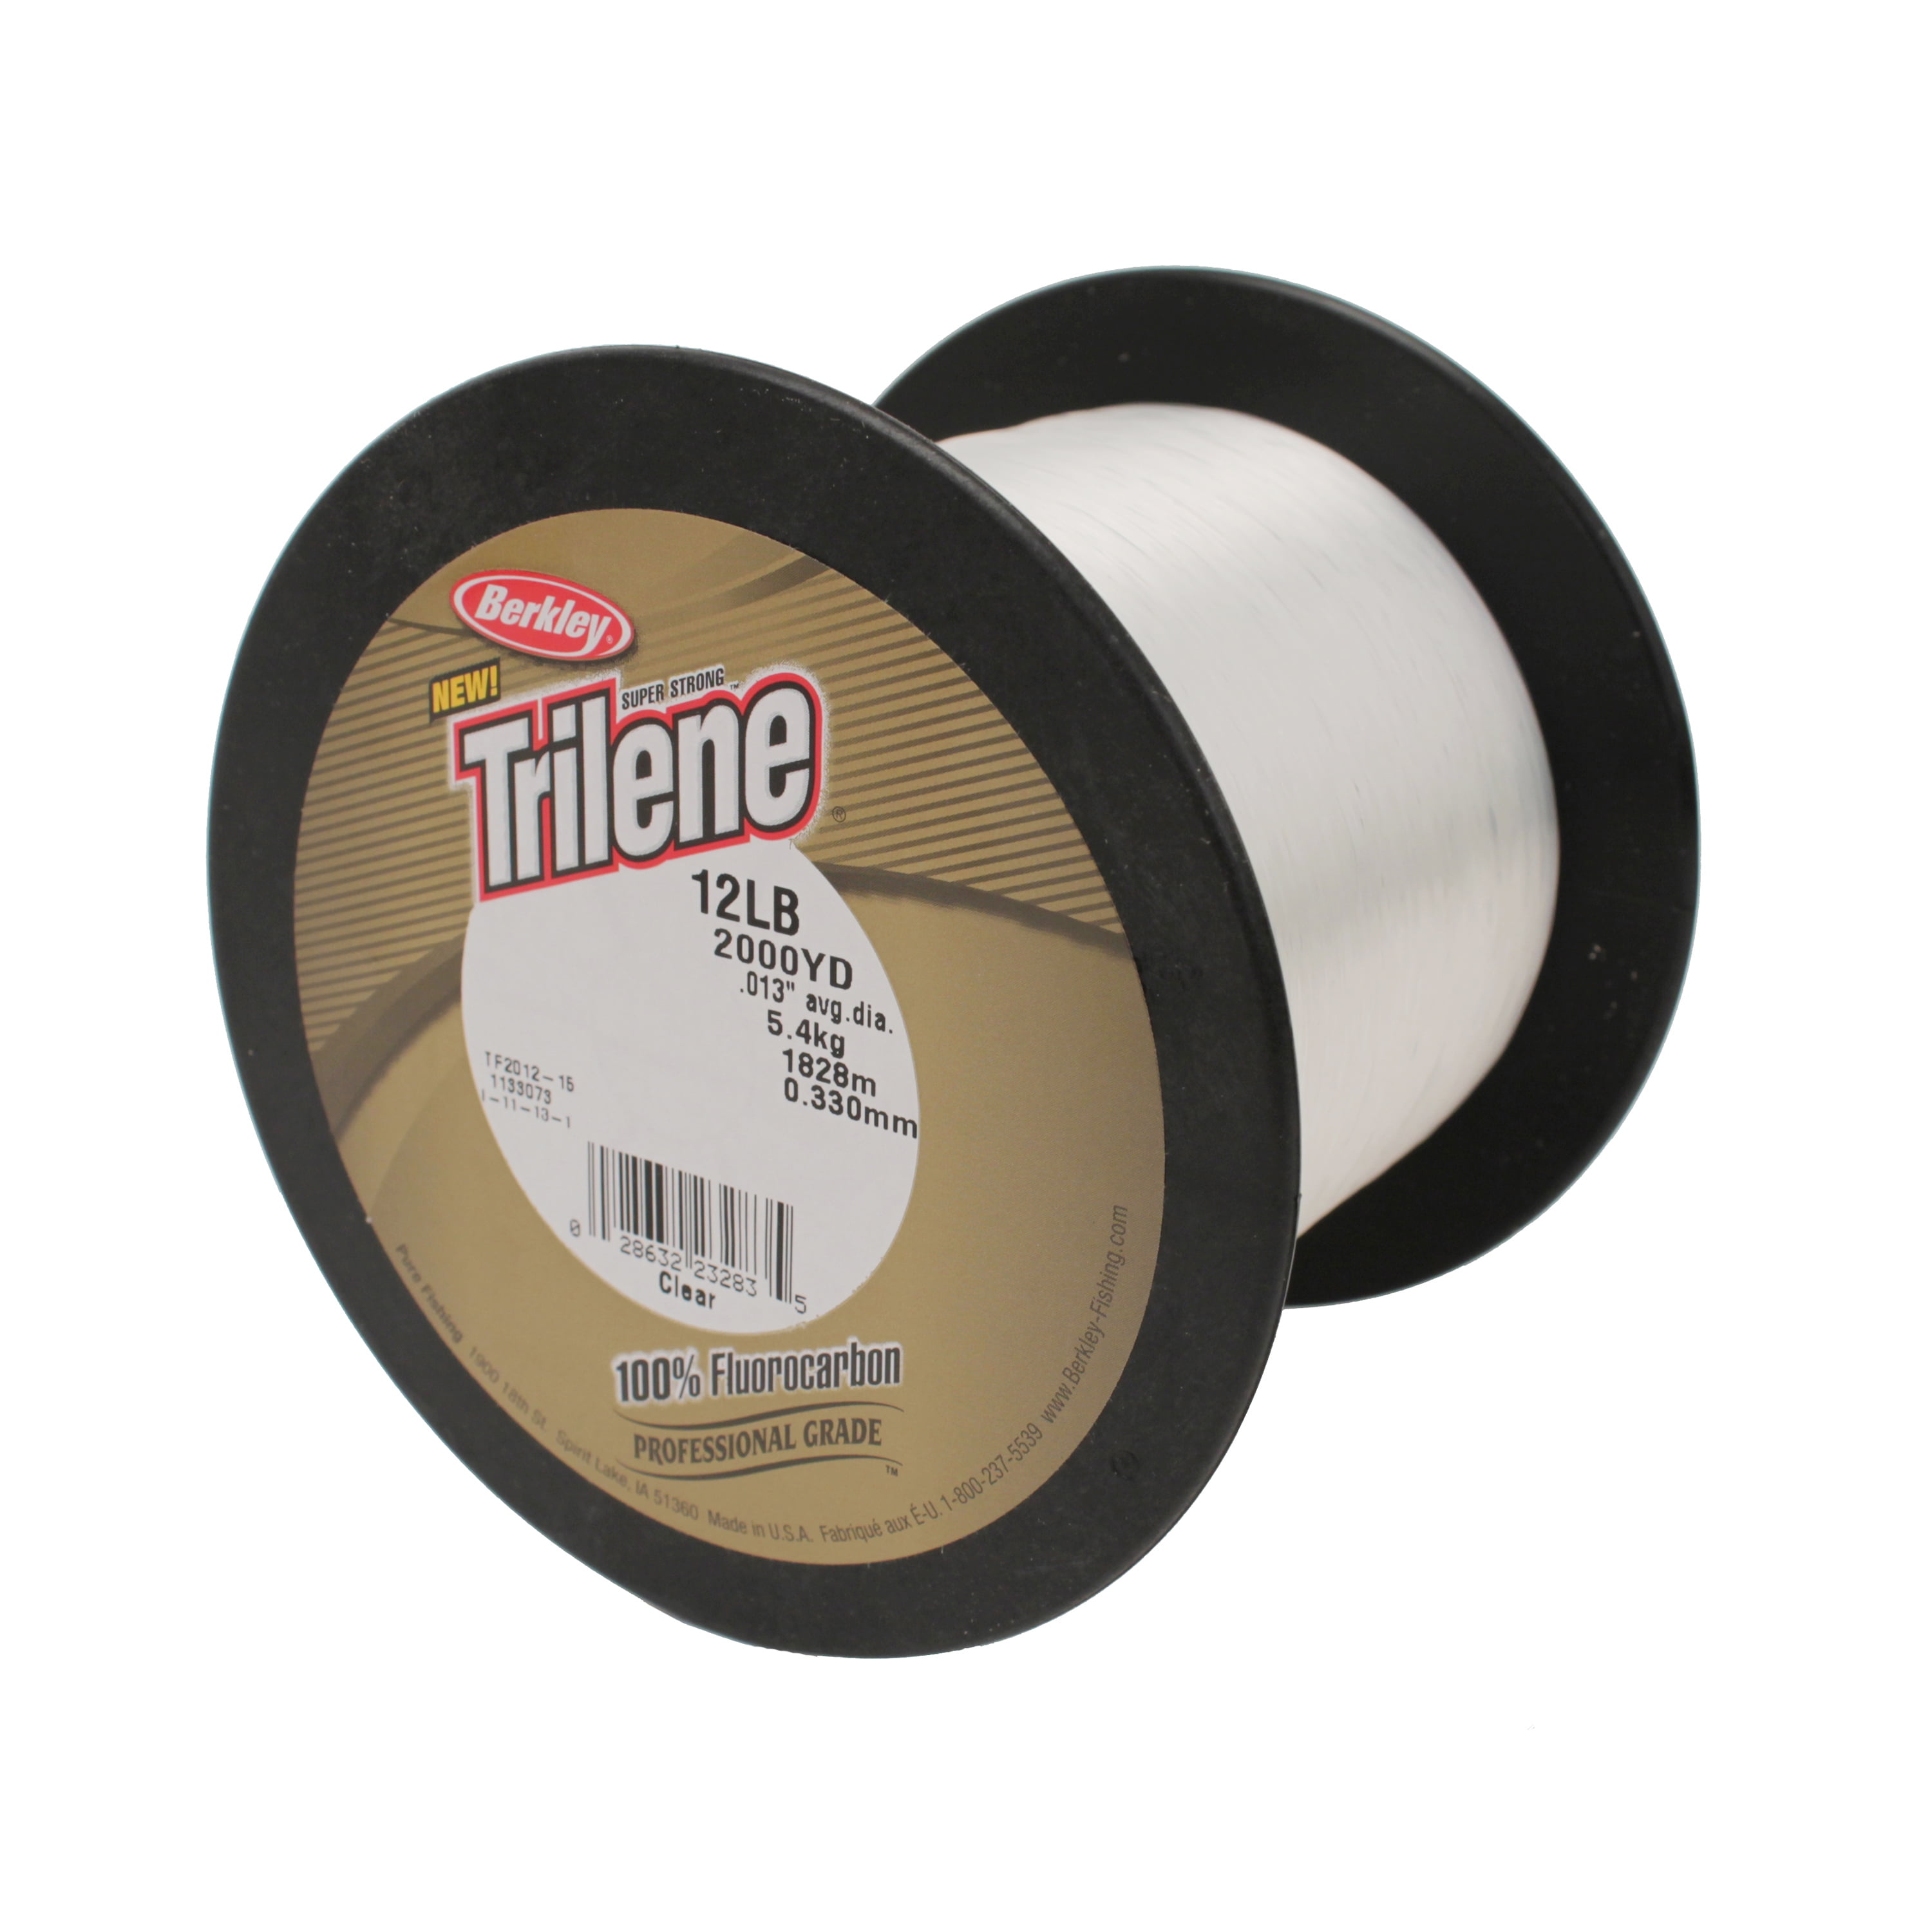 Berkley Trilene 100% Fluorocarbon Professional Grade Line 6lb 110yd